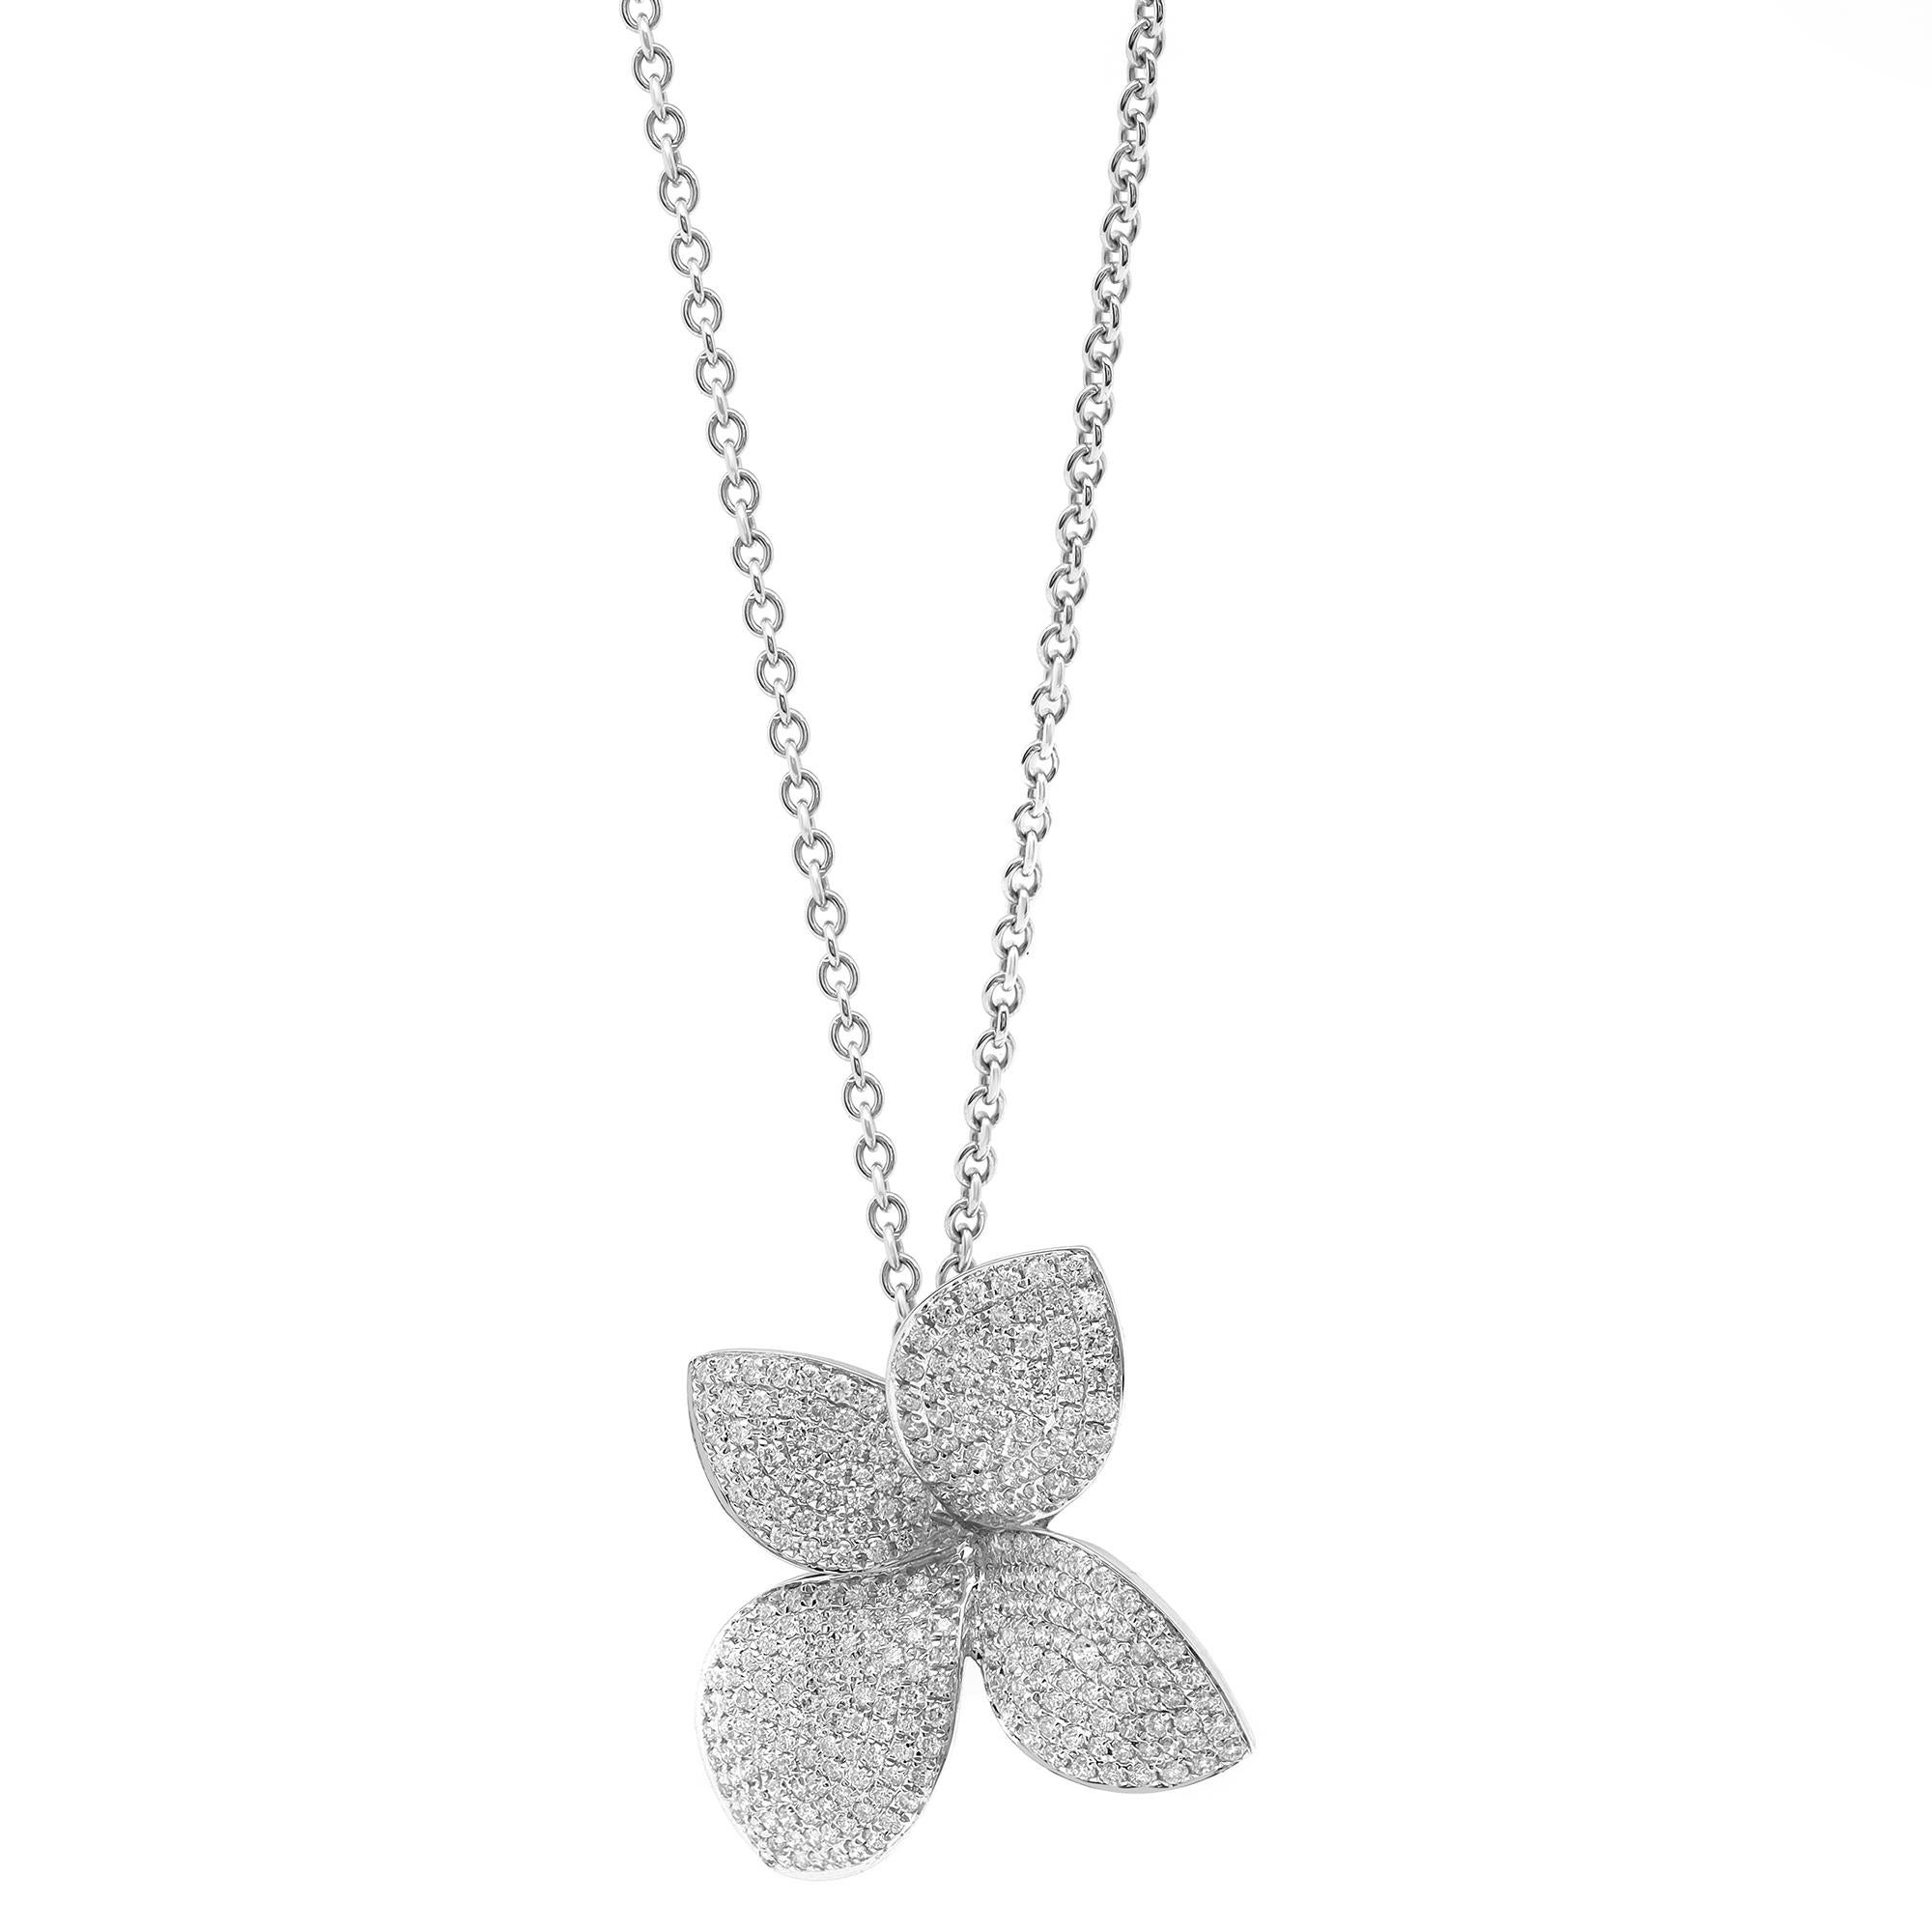 Modern 1.01Cttw Pave Set Round Cut Diamond Flower Pendant Necklace 18K White Gold For Sale